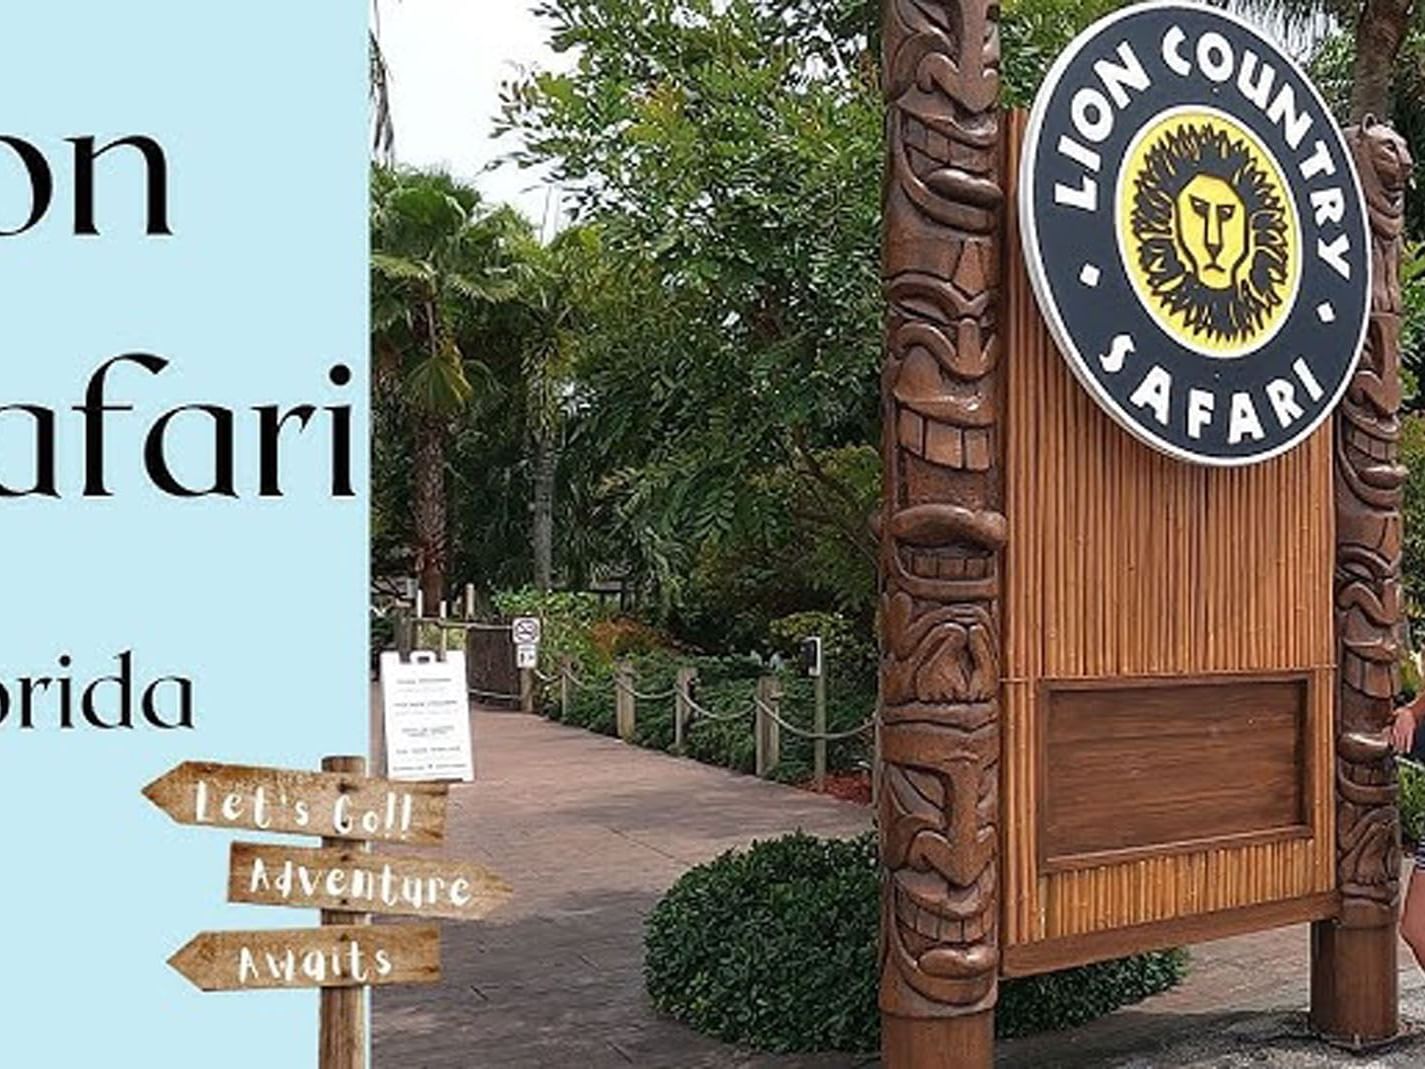 The Lion Country Safari logo & direction signpost by the entrance near Ocean Lodge Boca Raton